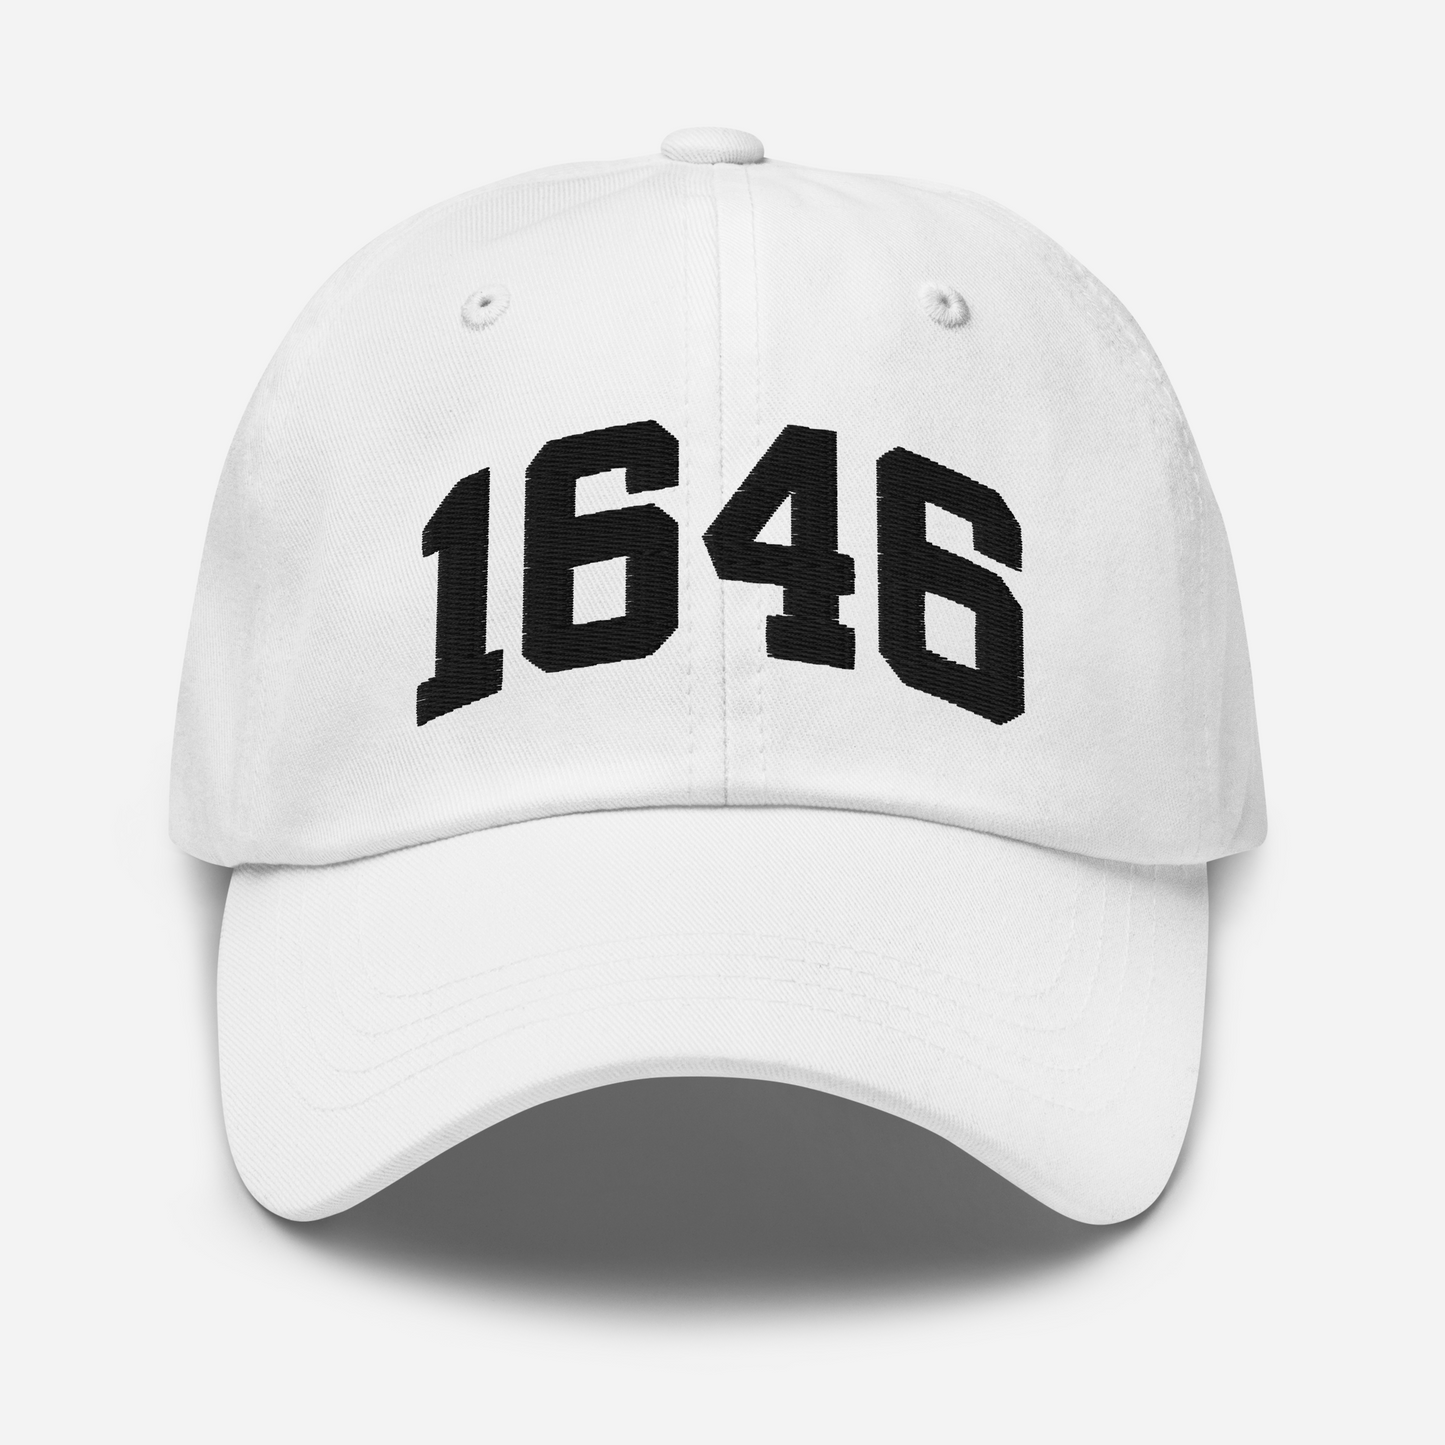 1646 Baseball Hat